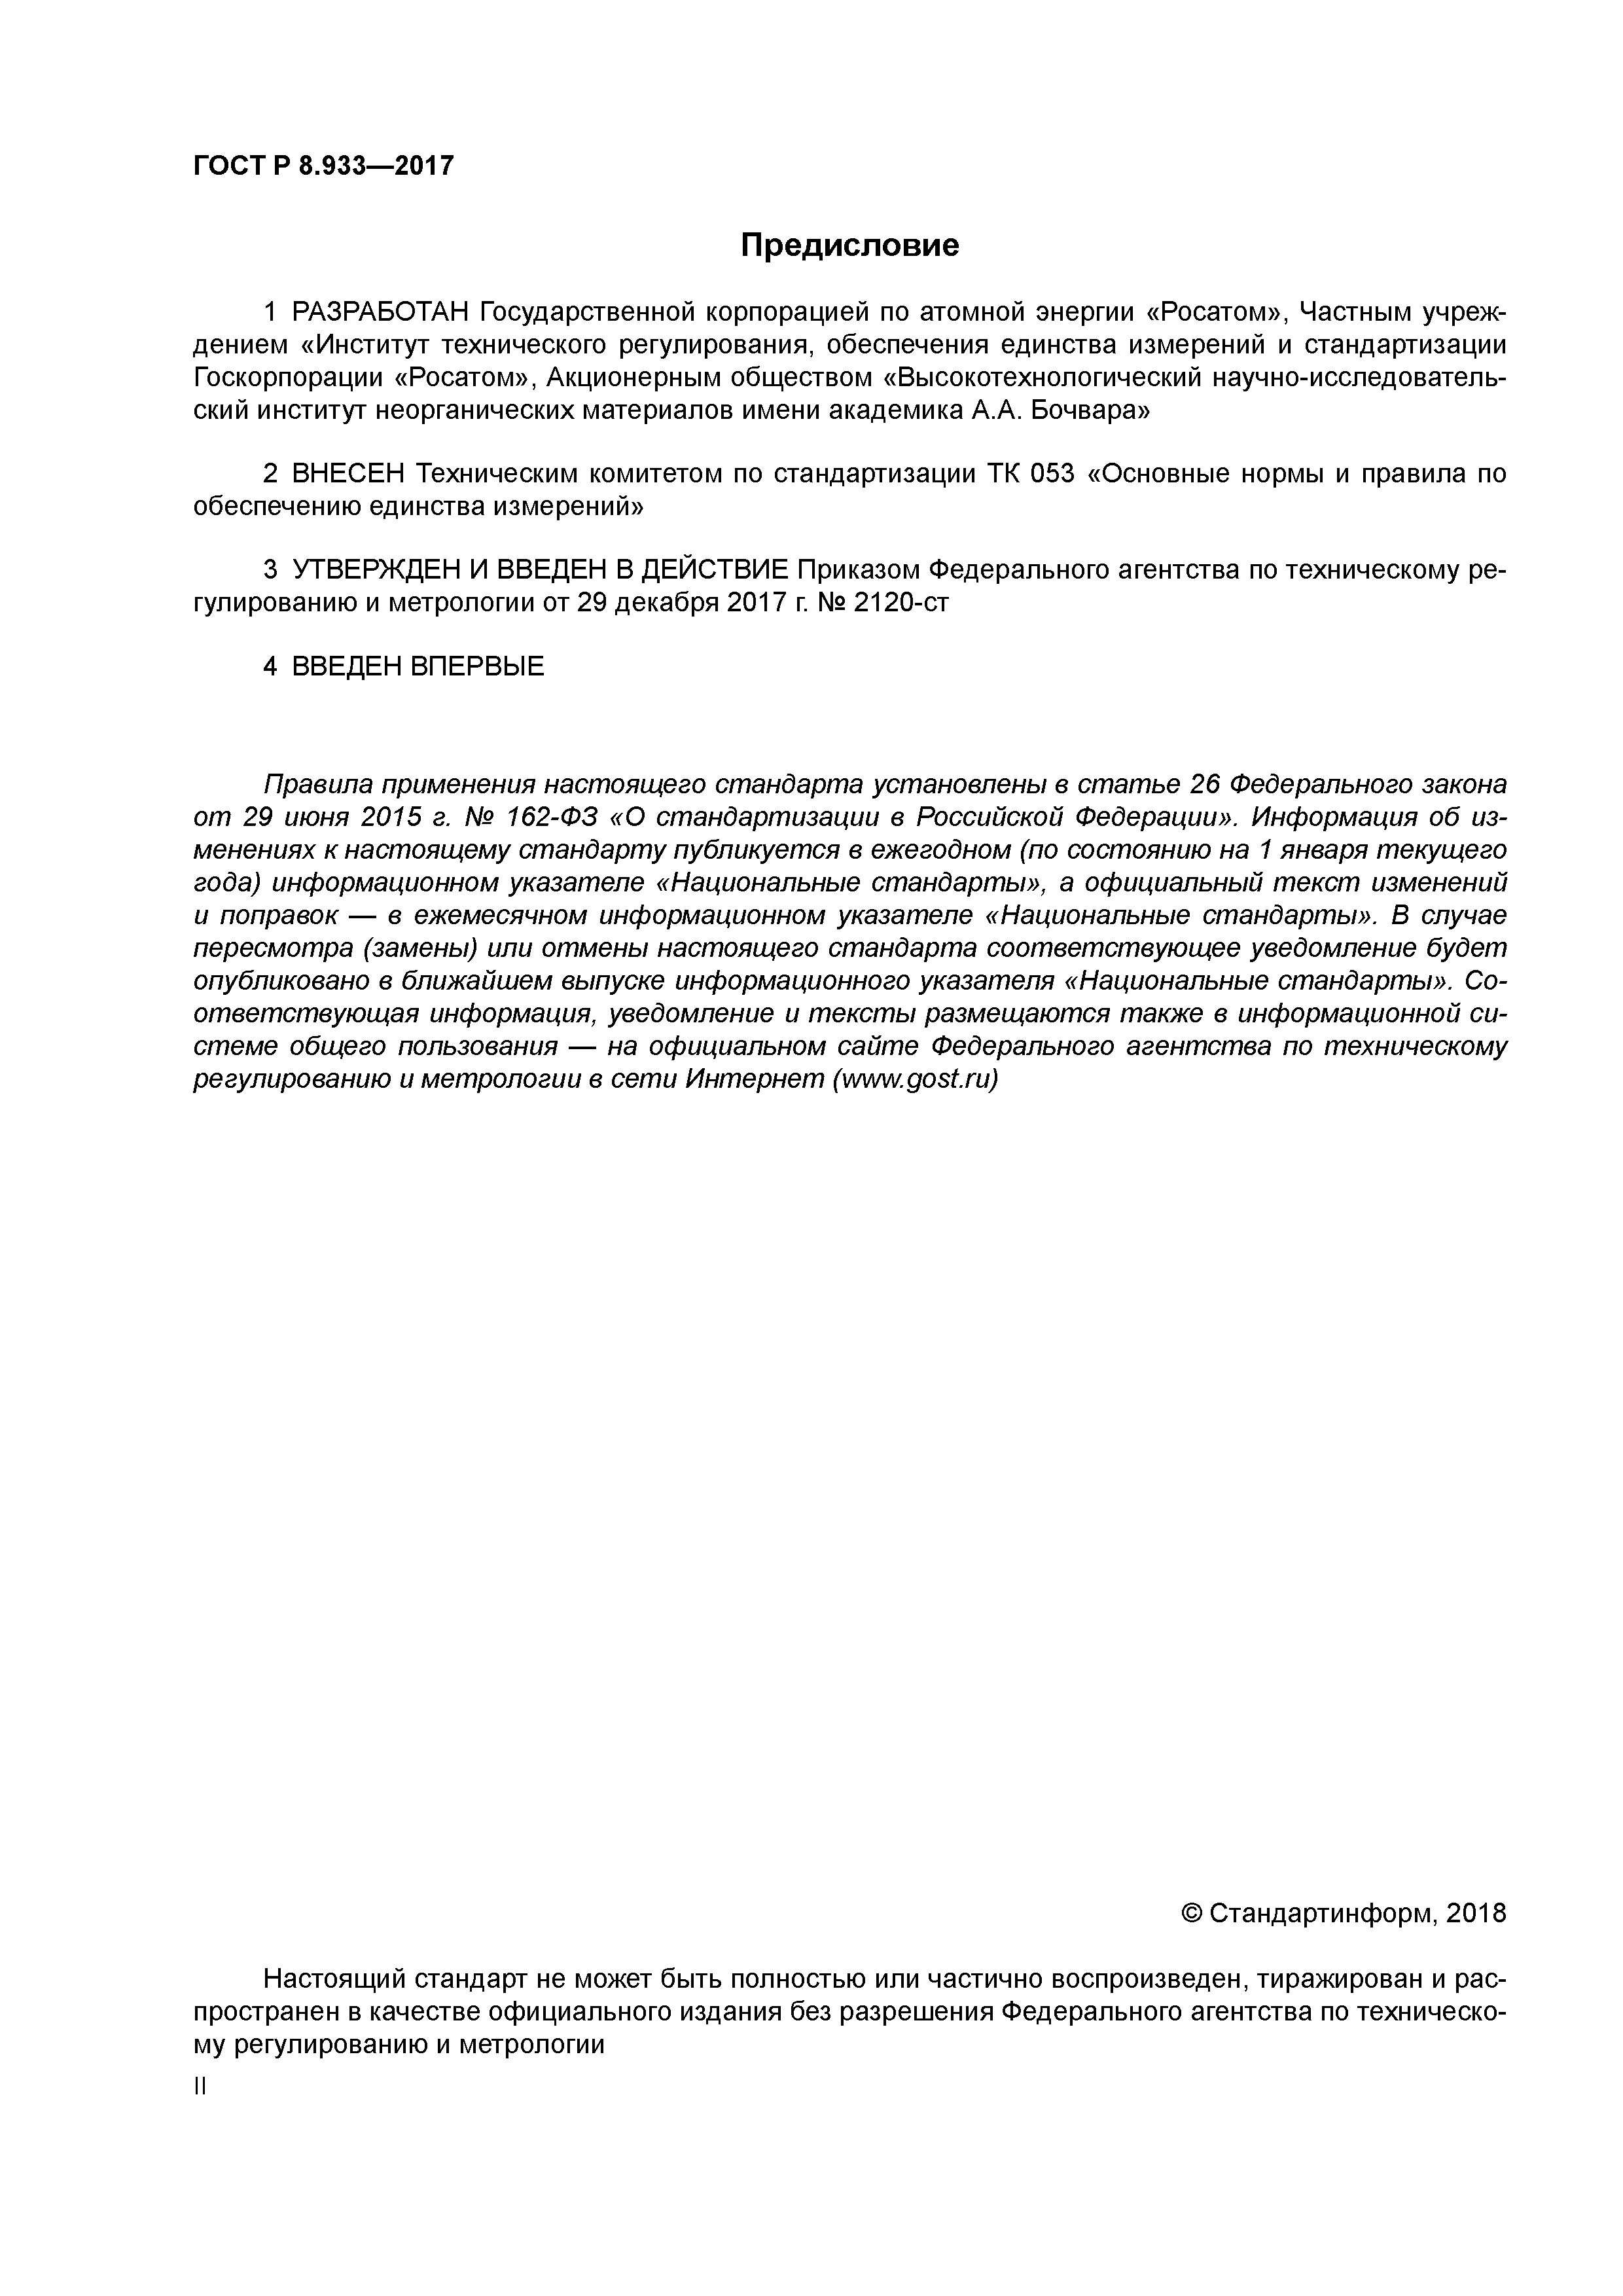 ГОСТ Р 8.933-2017